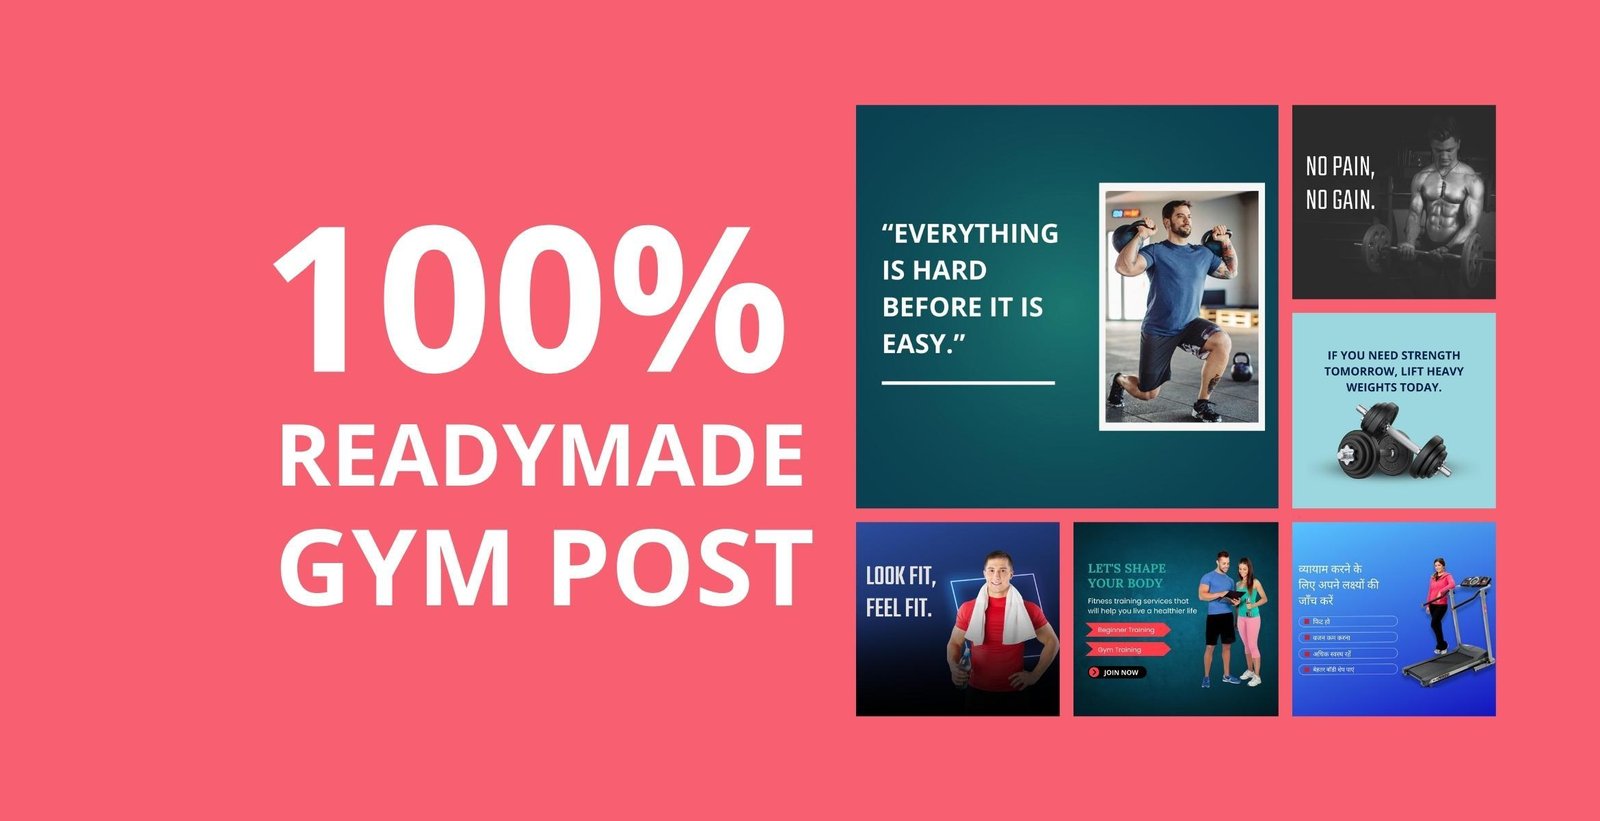 Readymade Gym Post